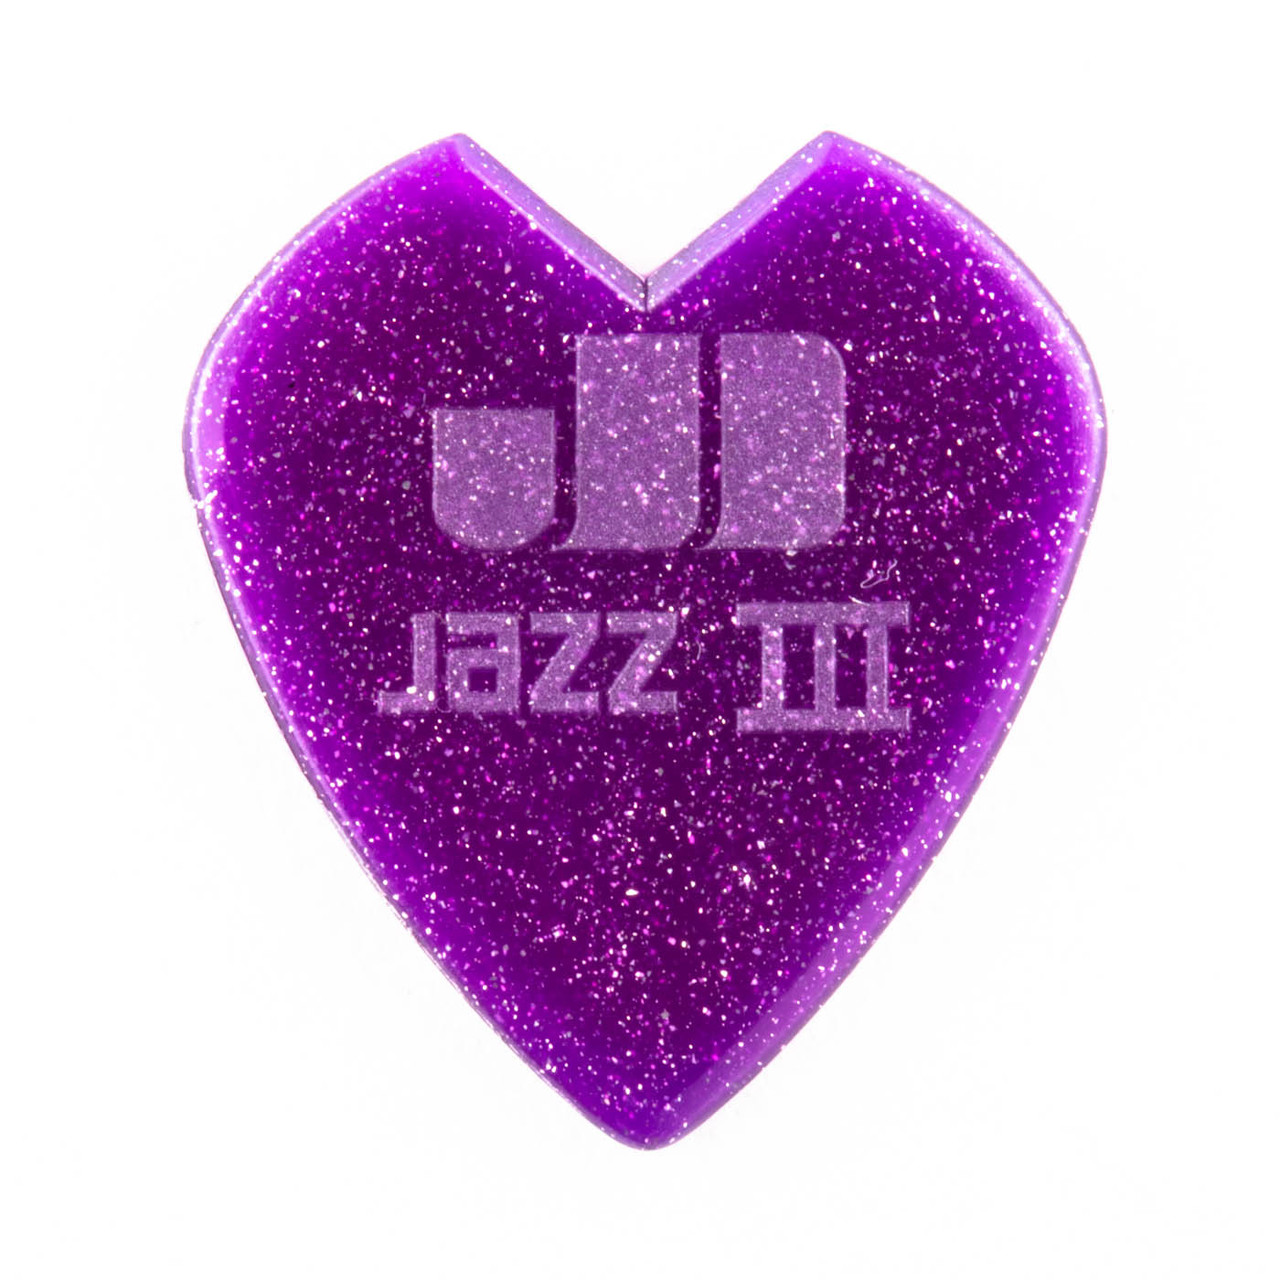 Jim Dunlop Kirk Hammett Jazz Iii Pick Purple Sparkle X24 - Guitar pick - Variation 3